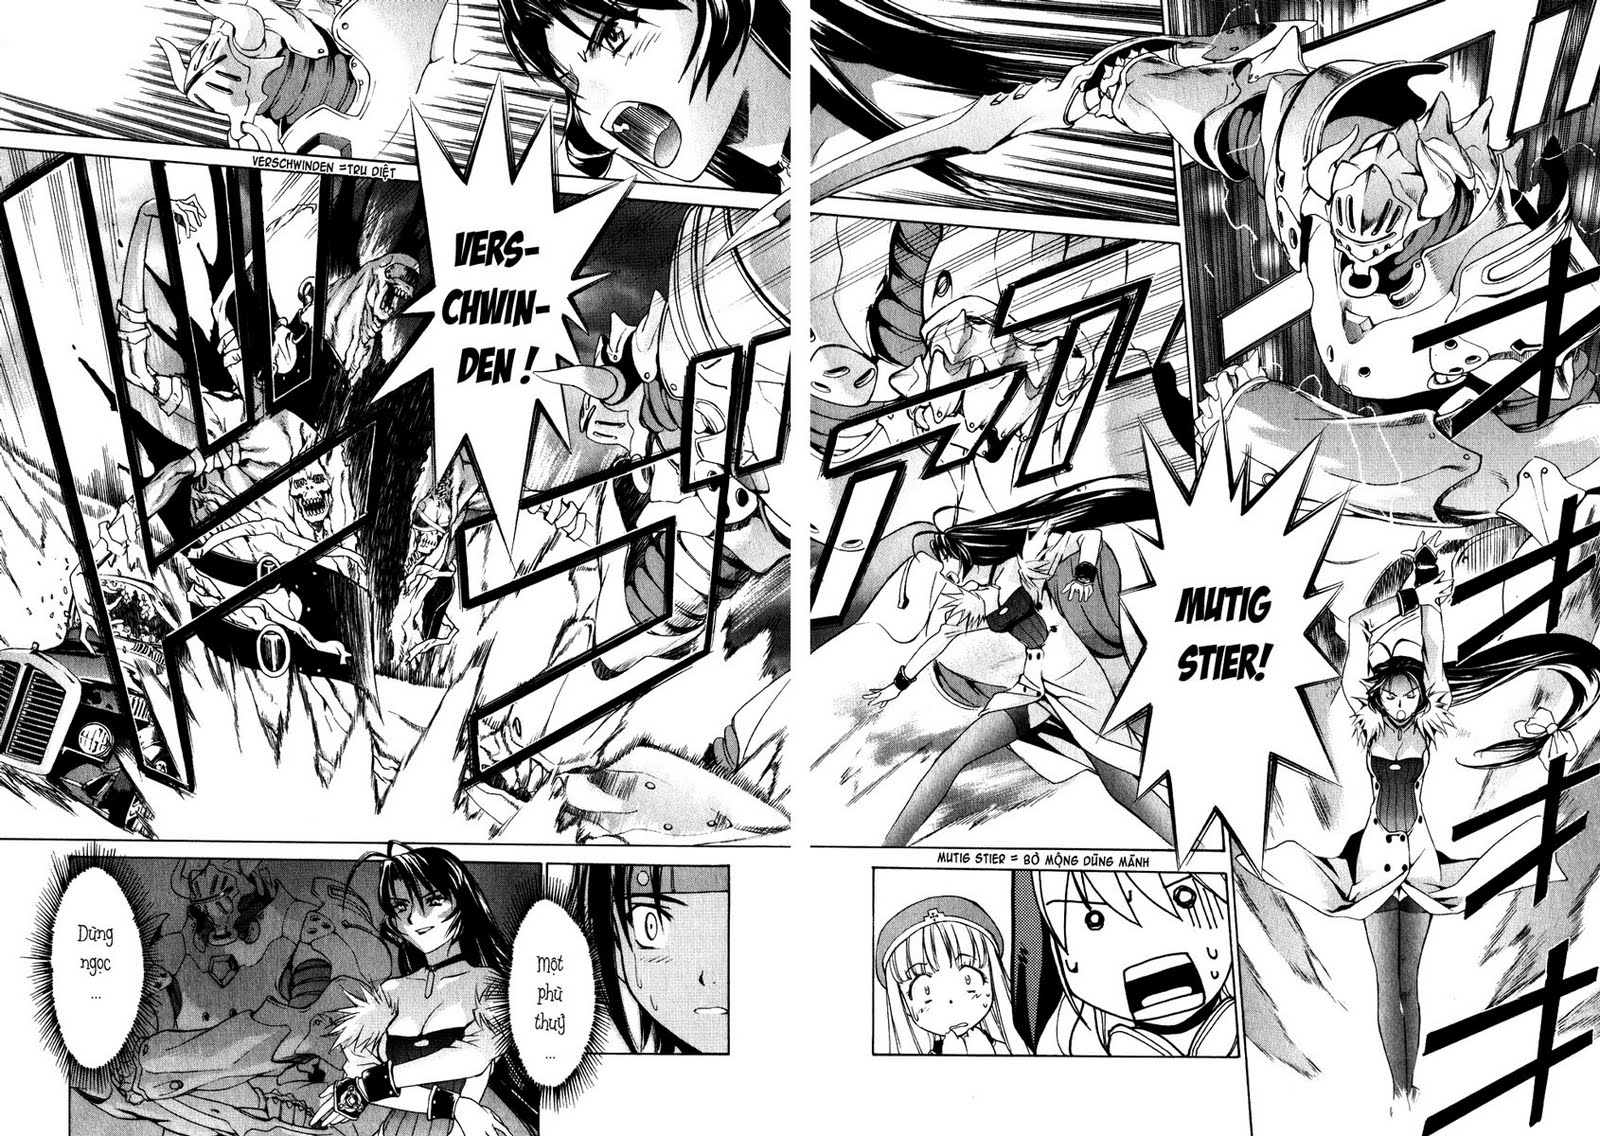 [Manga] Chrono Crusade (Đọc online tại SSF) - Page 2 Chap%252015-12